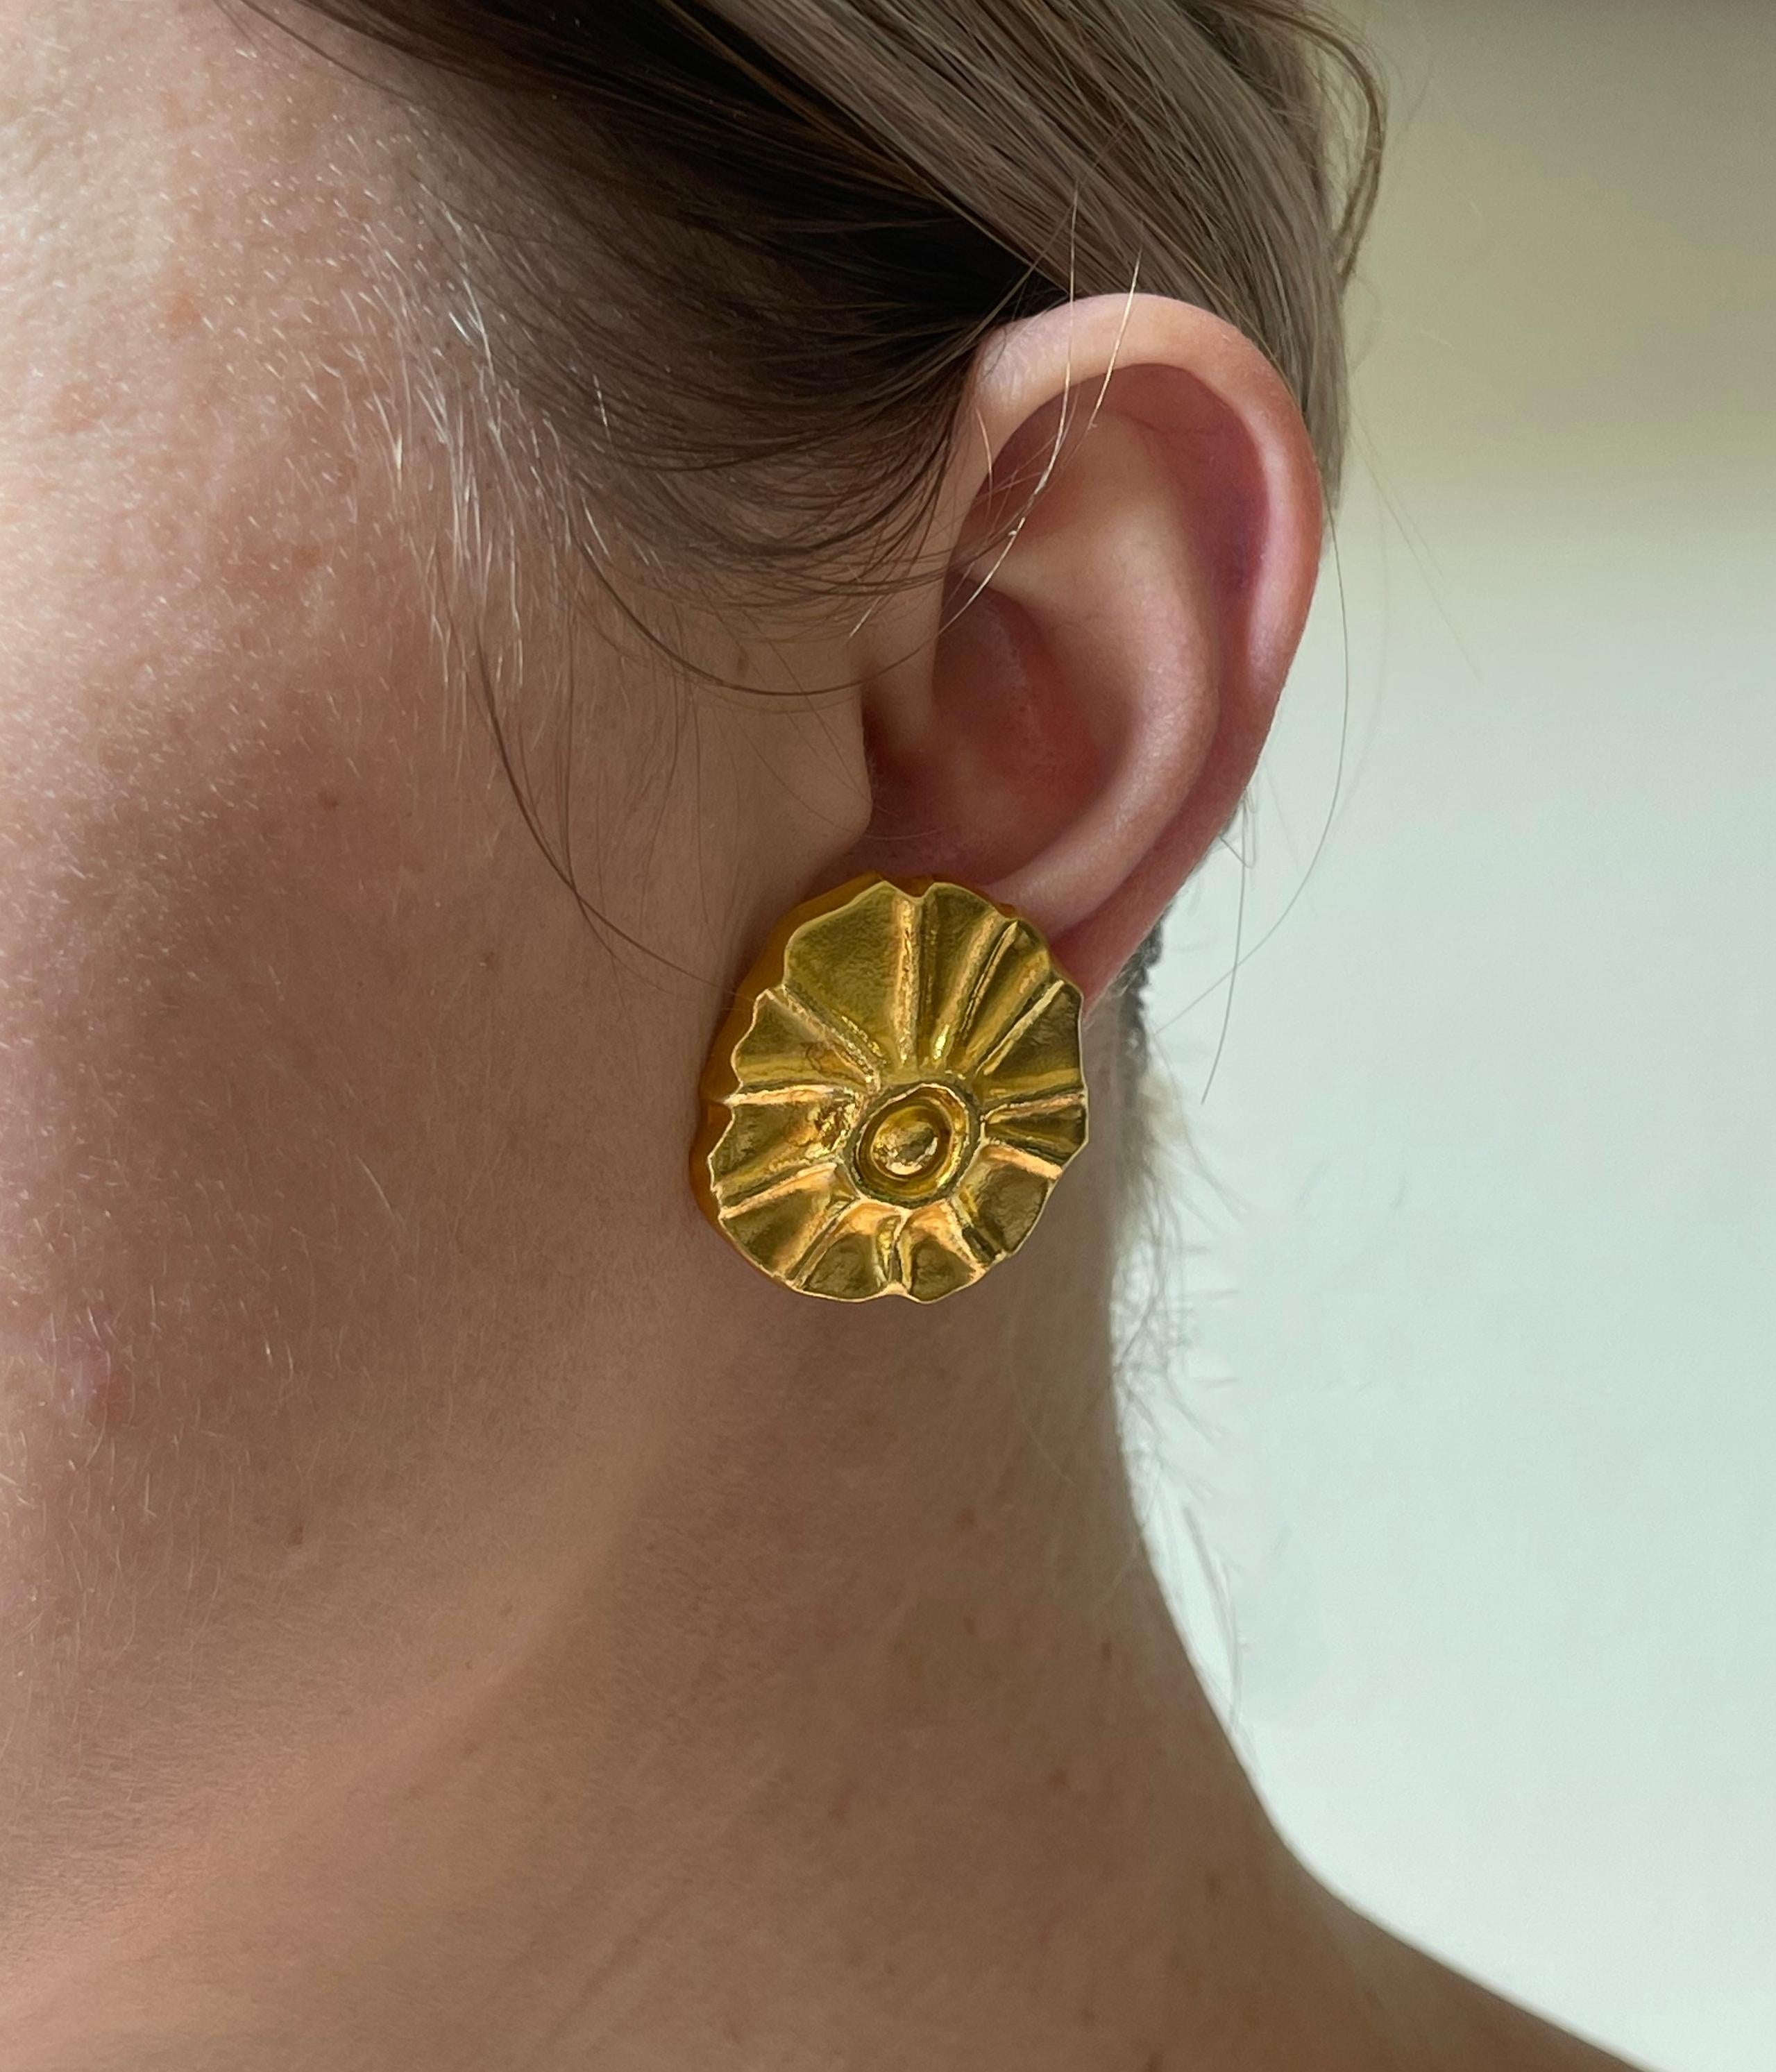 Pair of 22k gold shell/swirl motif earrings by Greek iconic designer Ilias Lalaounis. The earrings measure 125